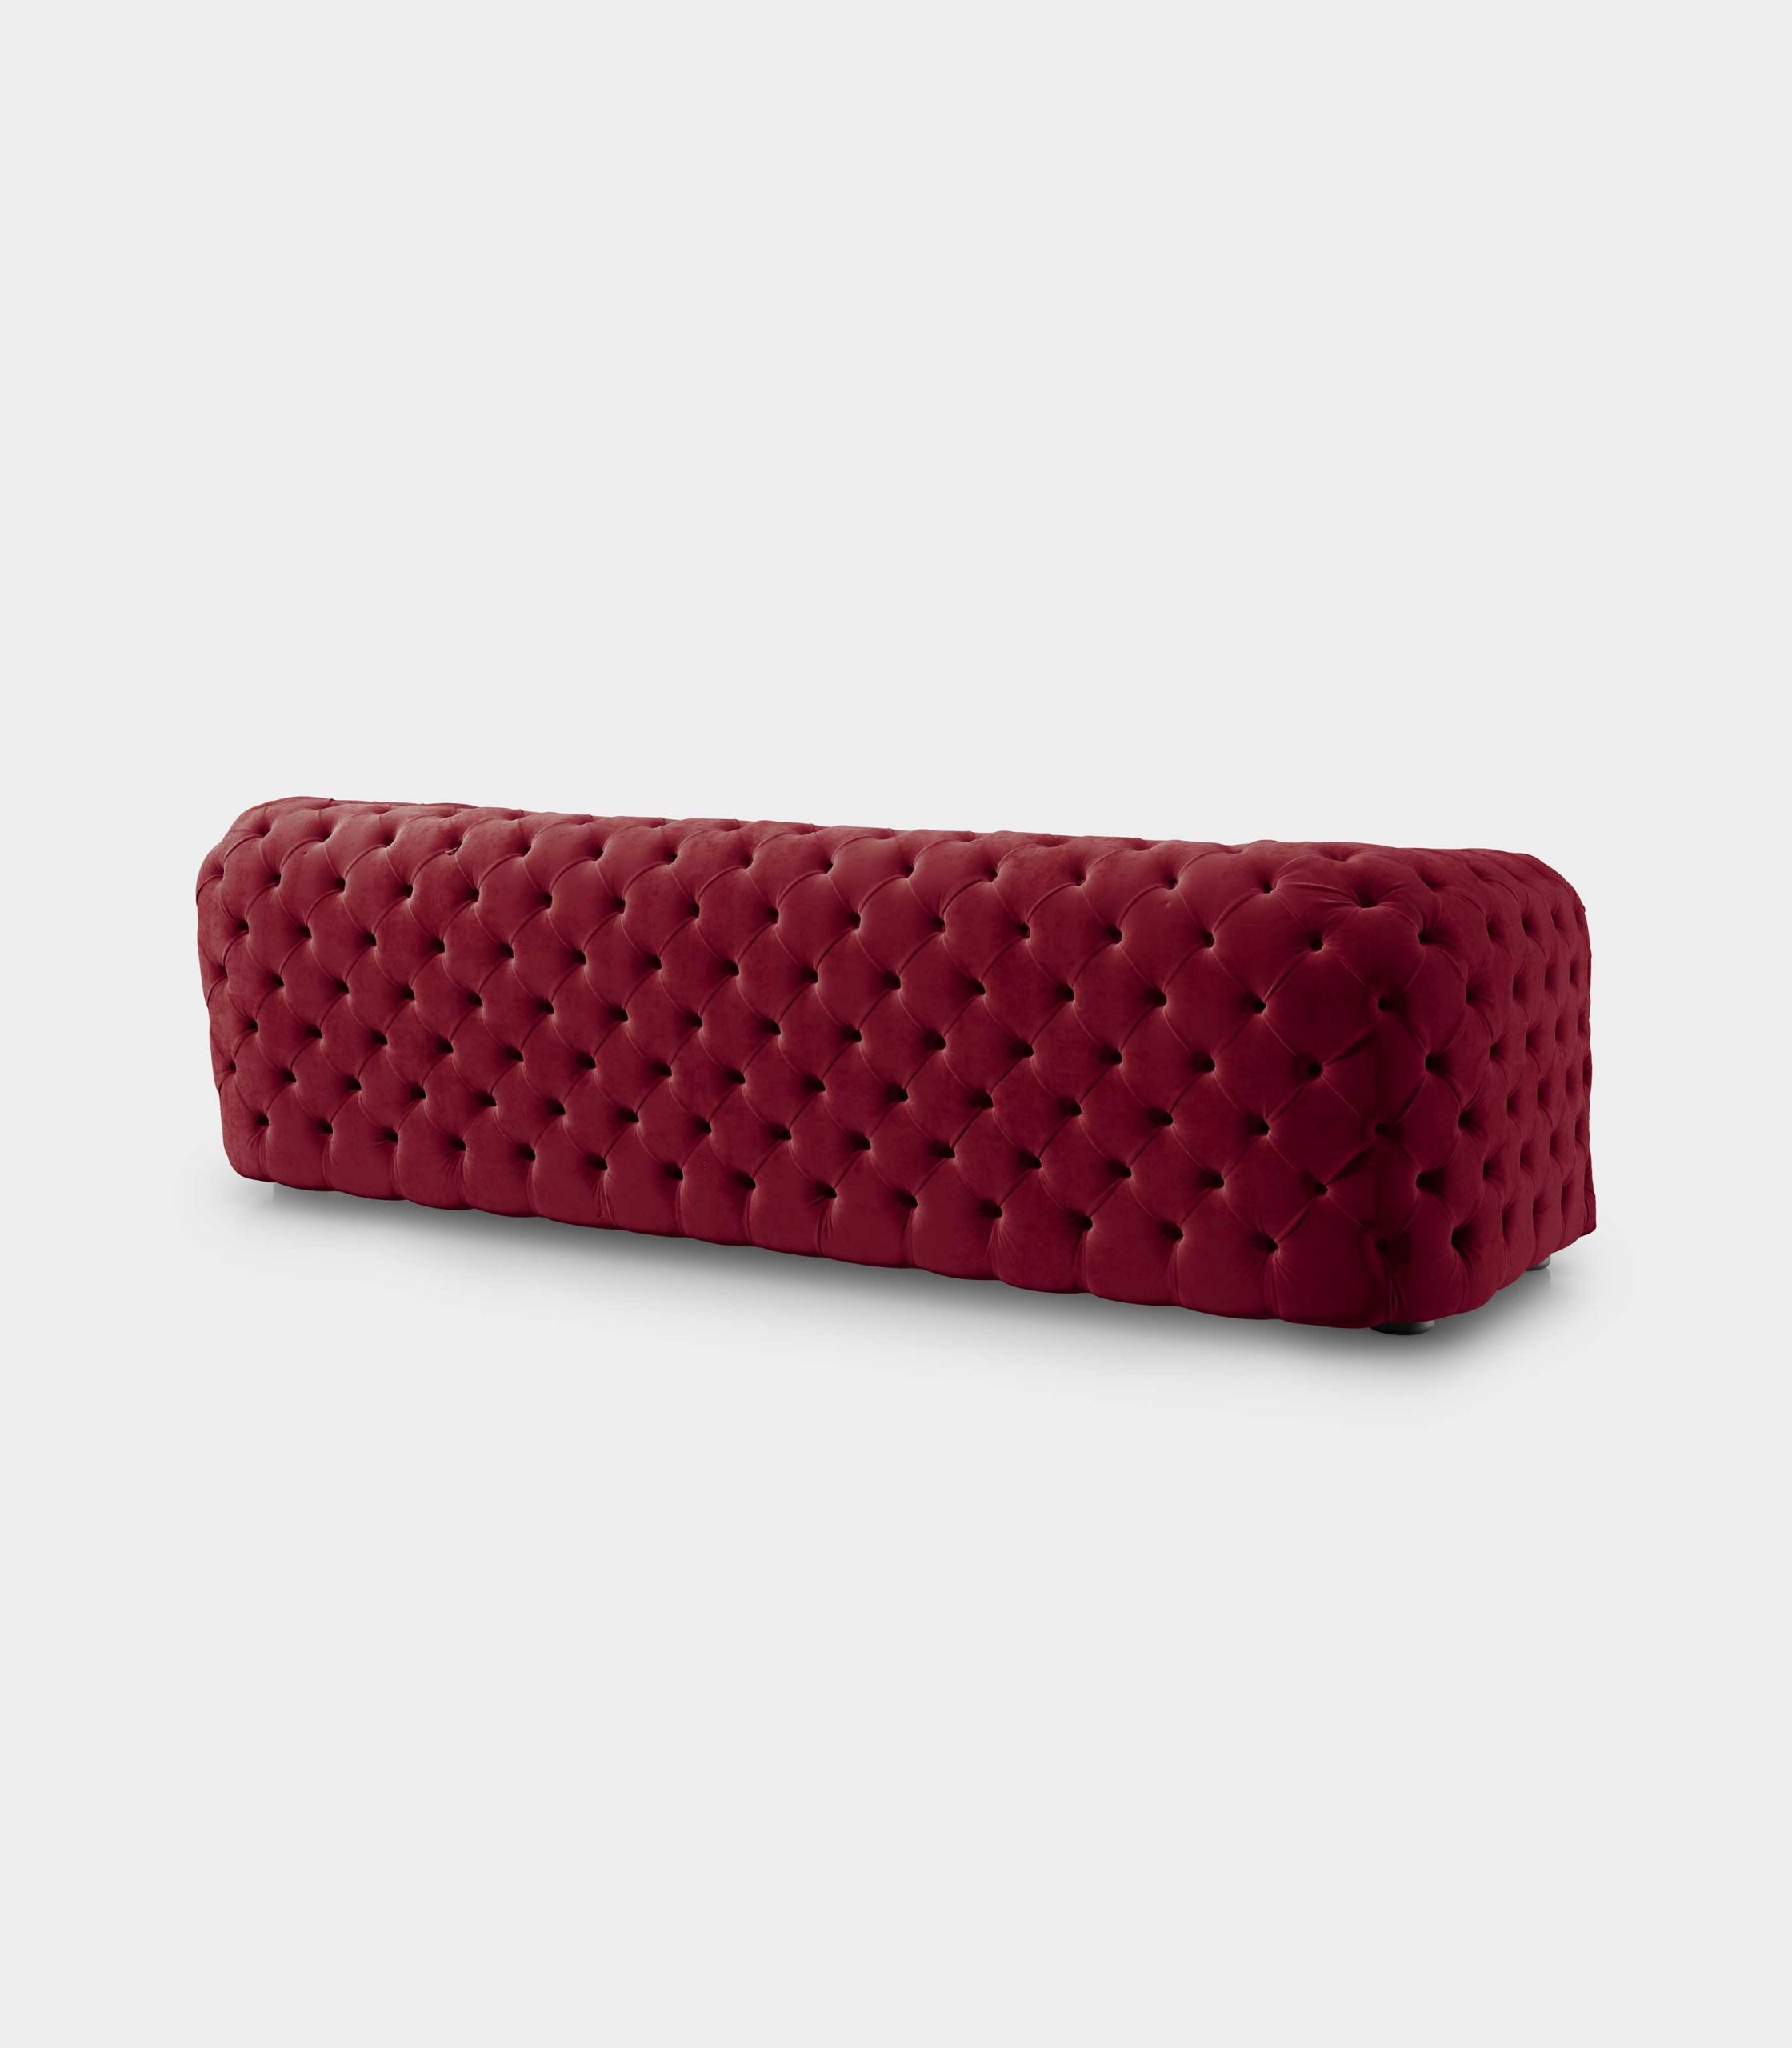 Capitonné red velvet sofa loopo milan design R